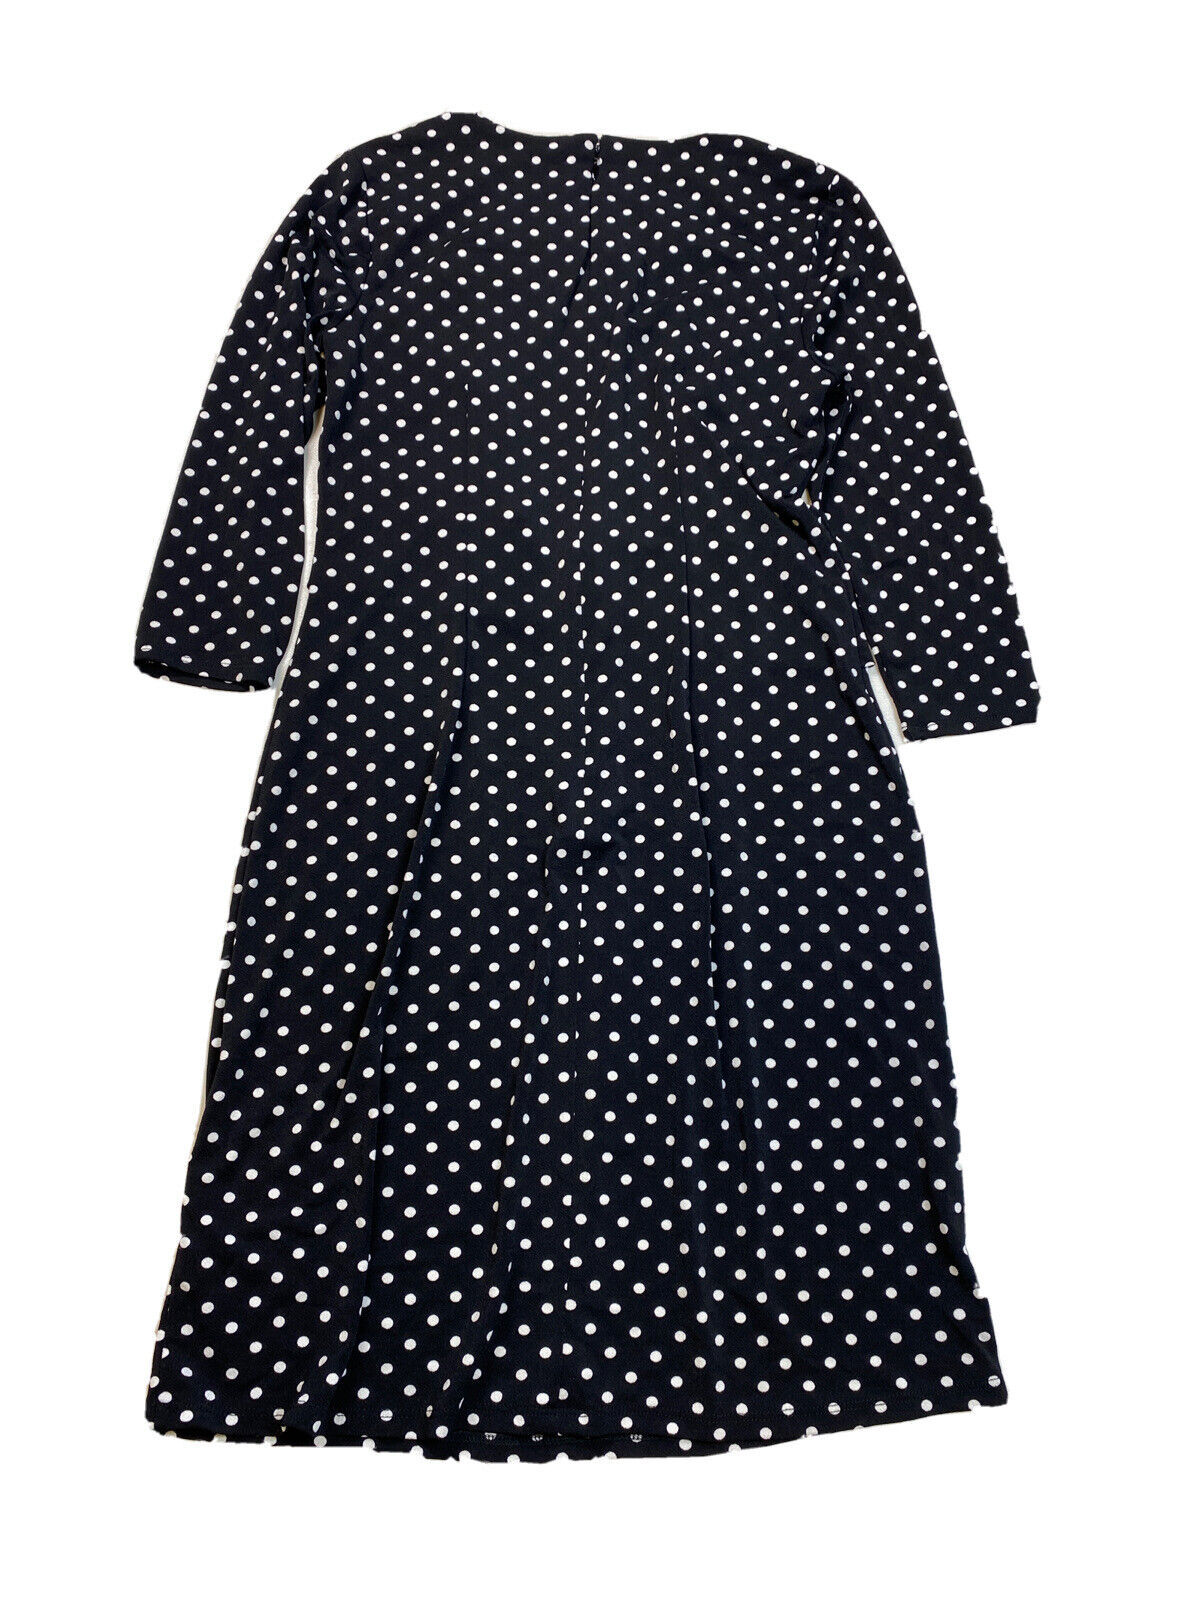 Ann Taylor Vestido blusón de manga 3/4 con lunares negros para mujer - Petite XSP